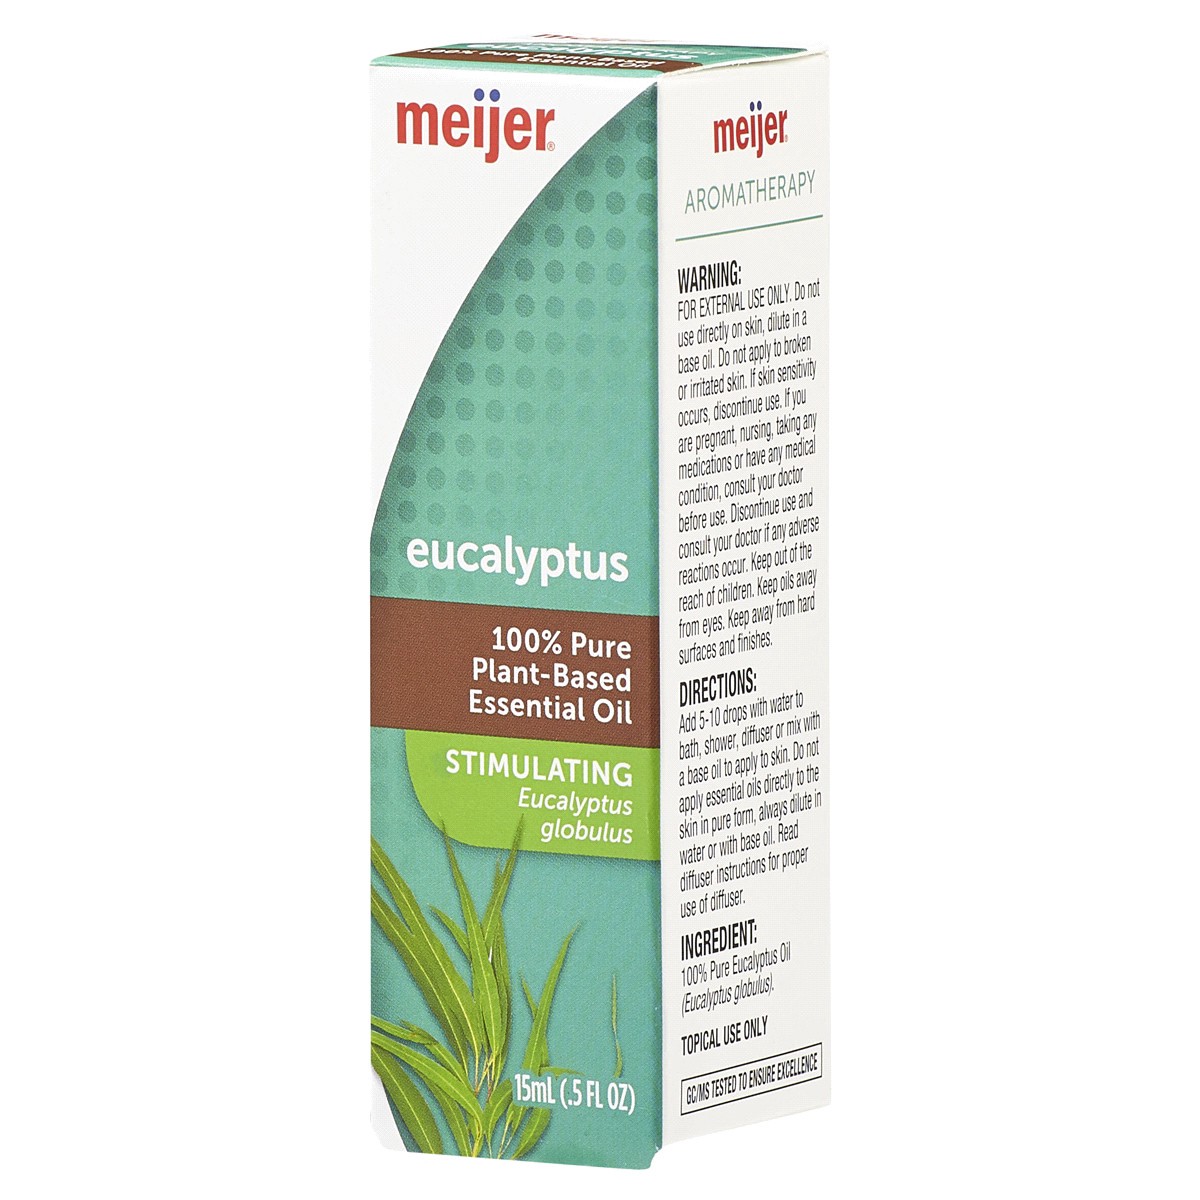 slide 19 of 29, MEIJER WELLNESS Meijer Aromatherapy Eucalyptus Essential Oil, 15 ml